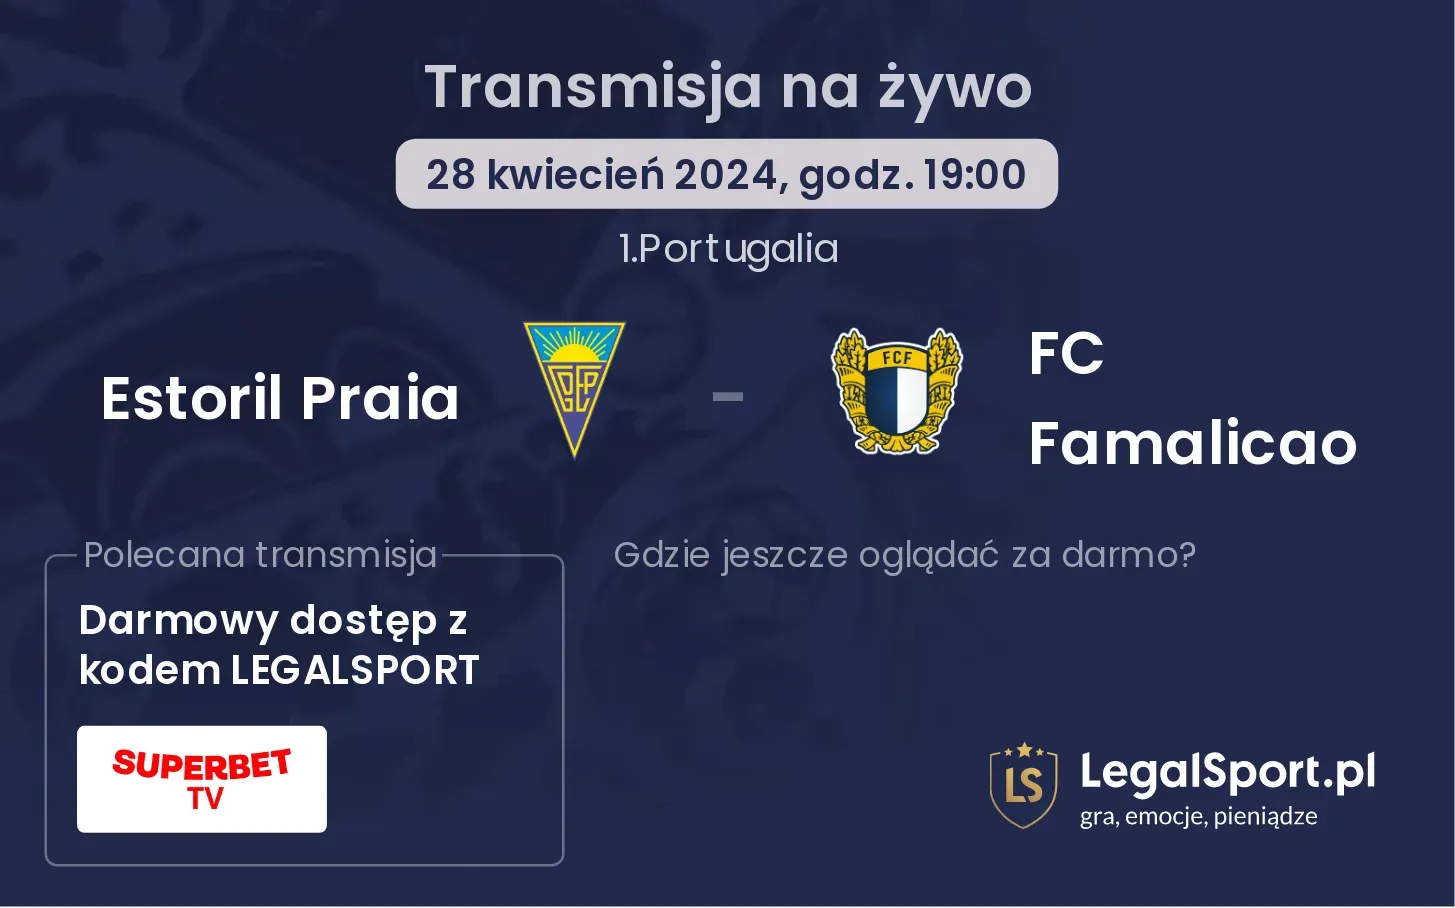 Estoril Praia - FC Famalicao transmisja na żywo